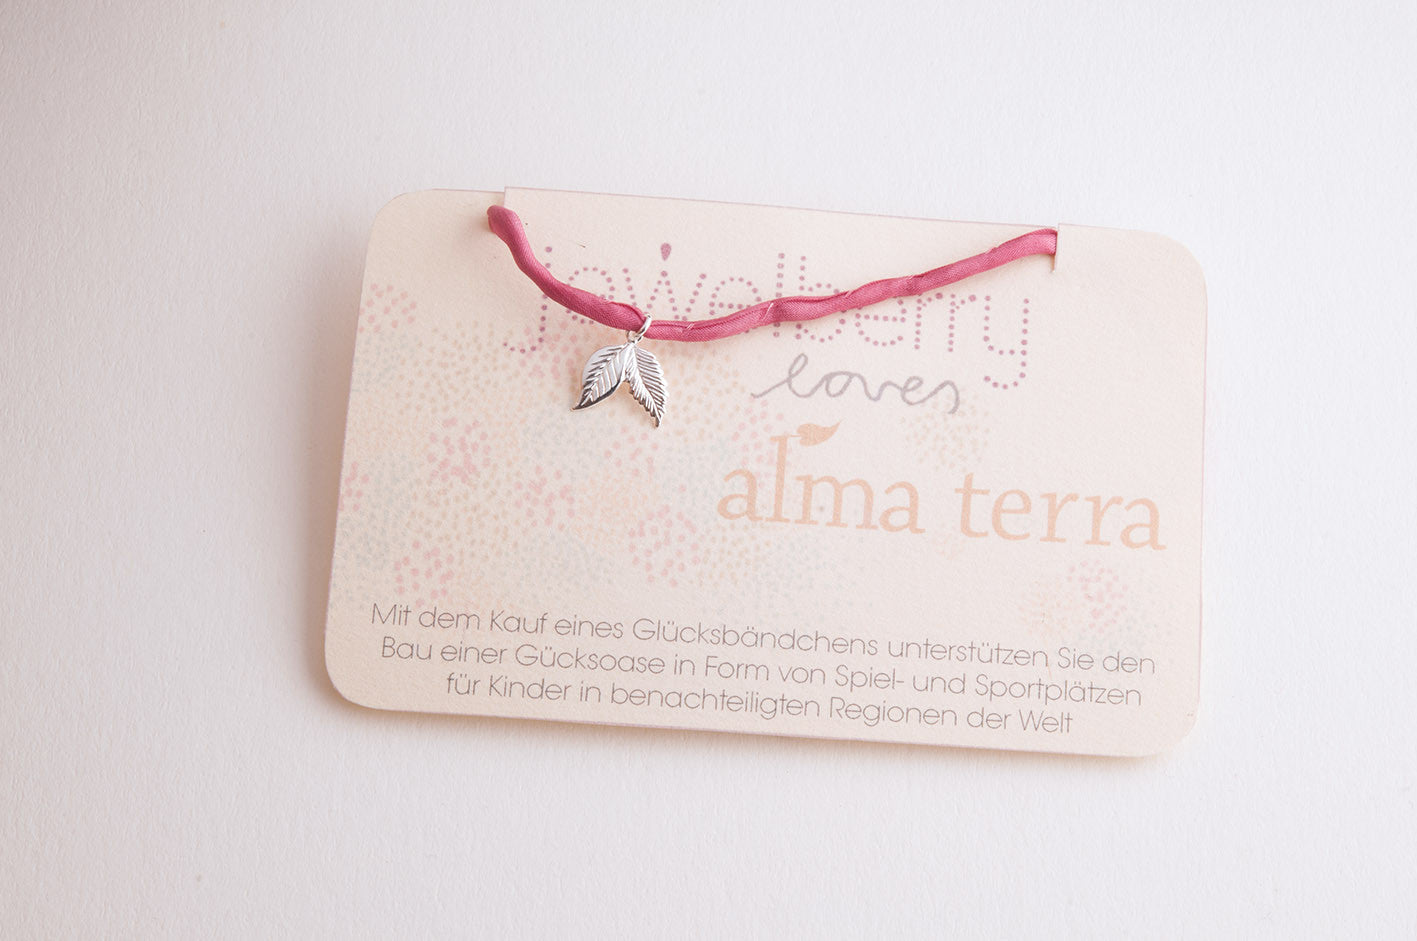 Charity Armband Jewelberry for Almaterra LEAF versilbert